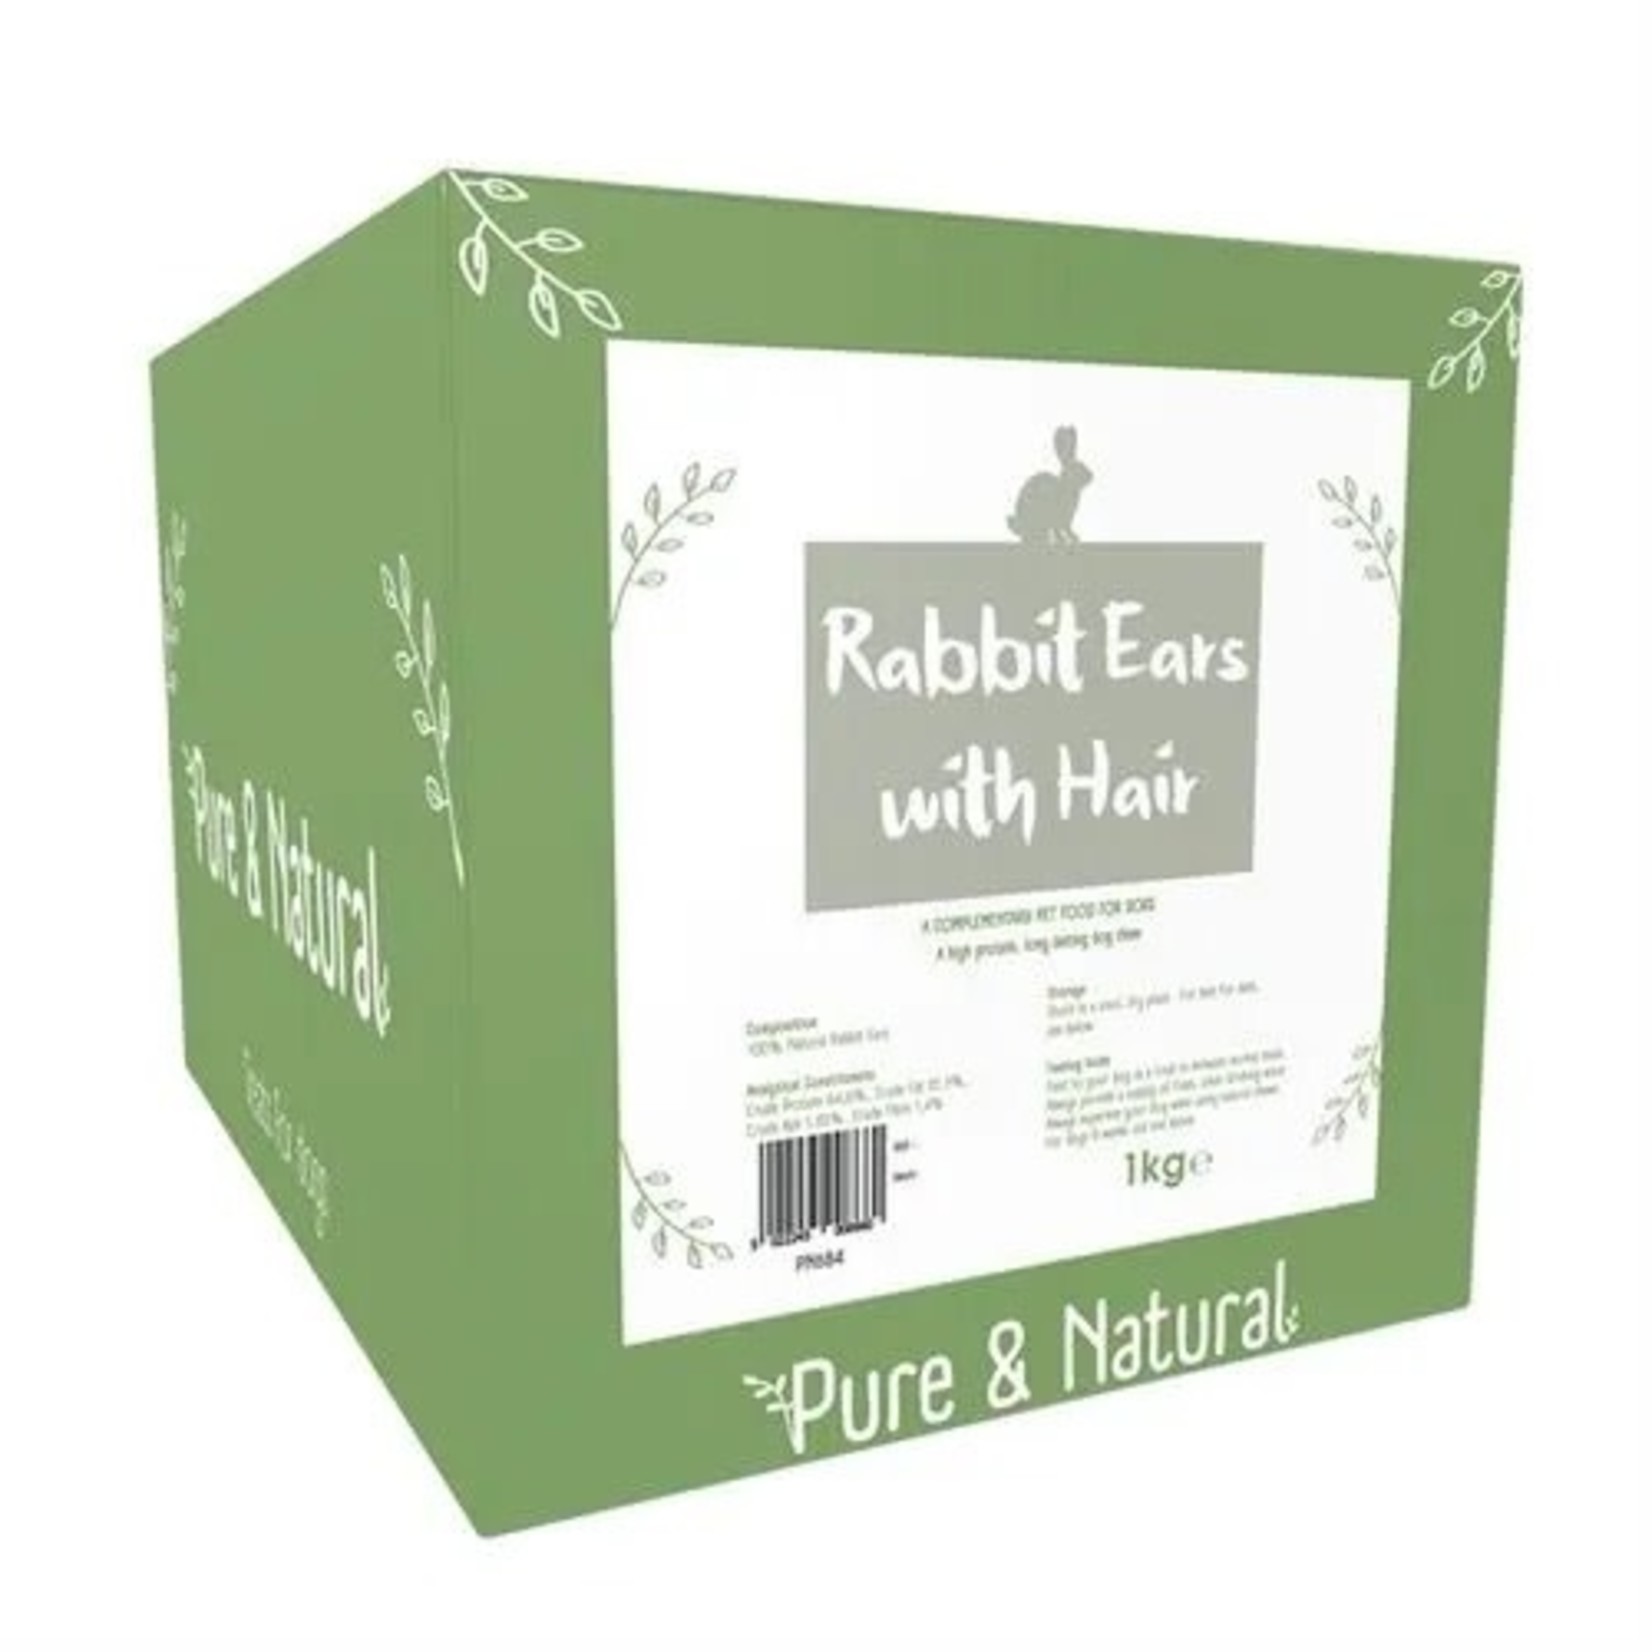 Pure & Natural Rabbit Ears with Hair Dog Treats, 1kg Box